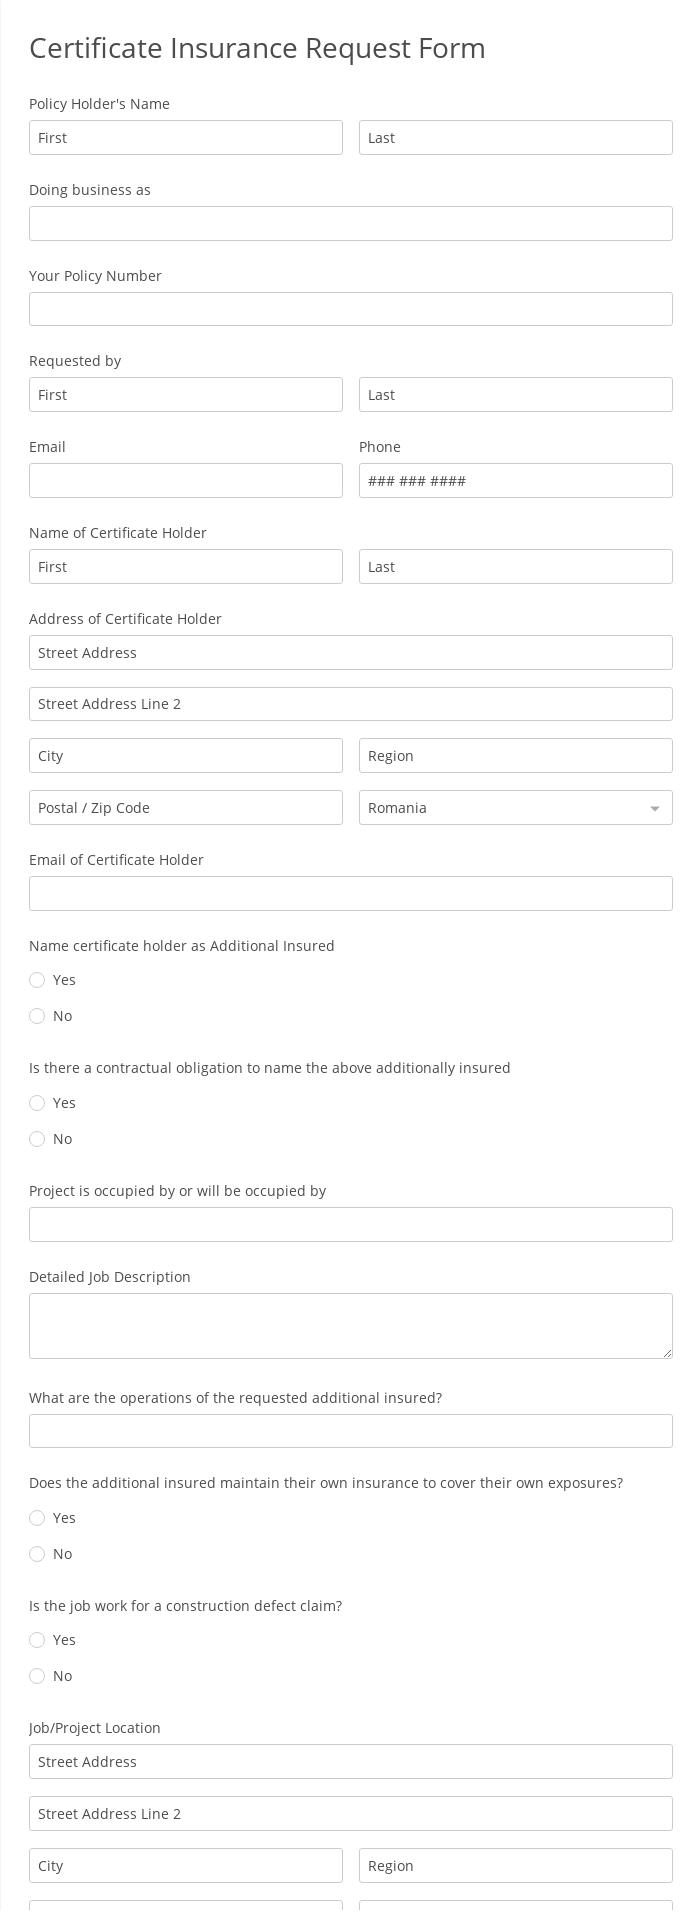 Certificate Insurance Request Form